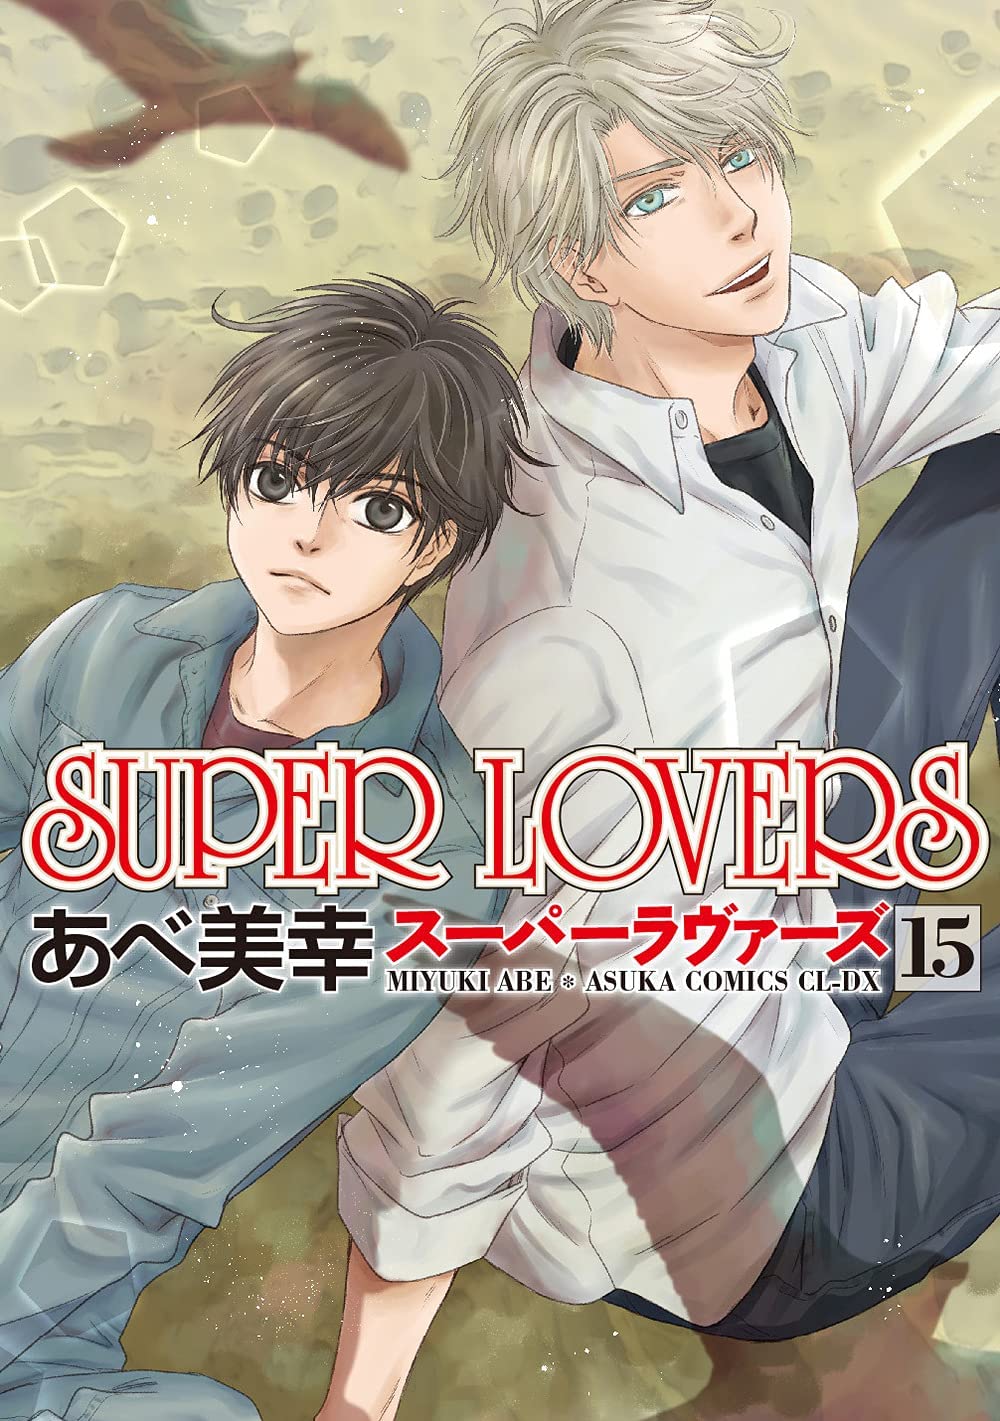 Super Lovers - MangaDex